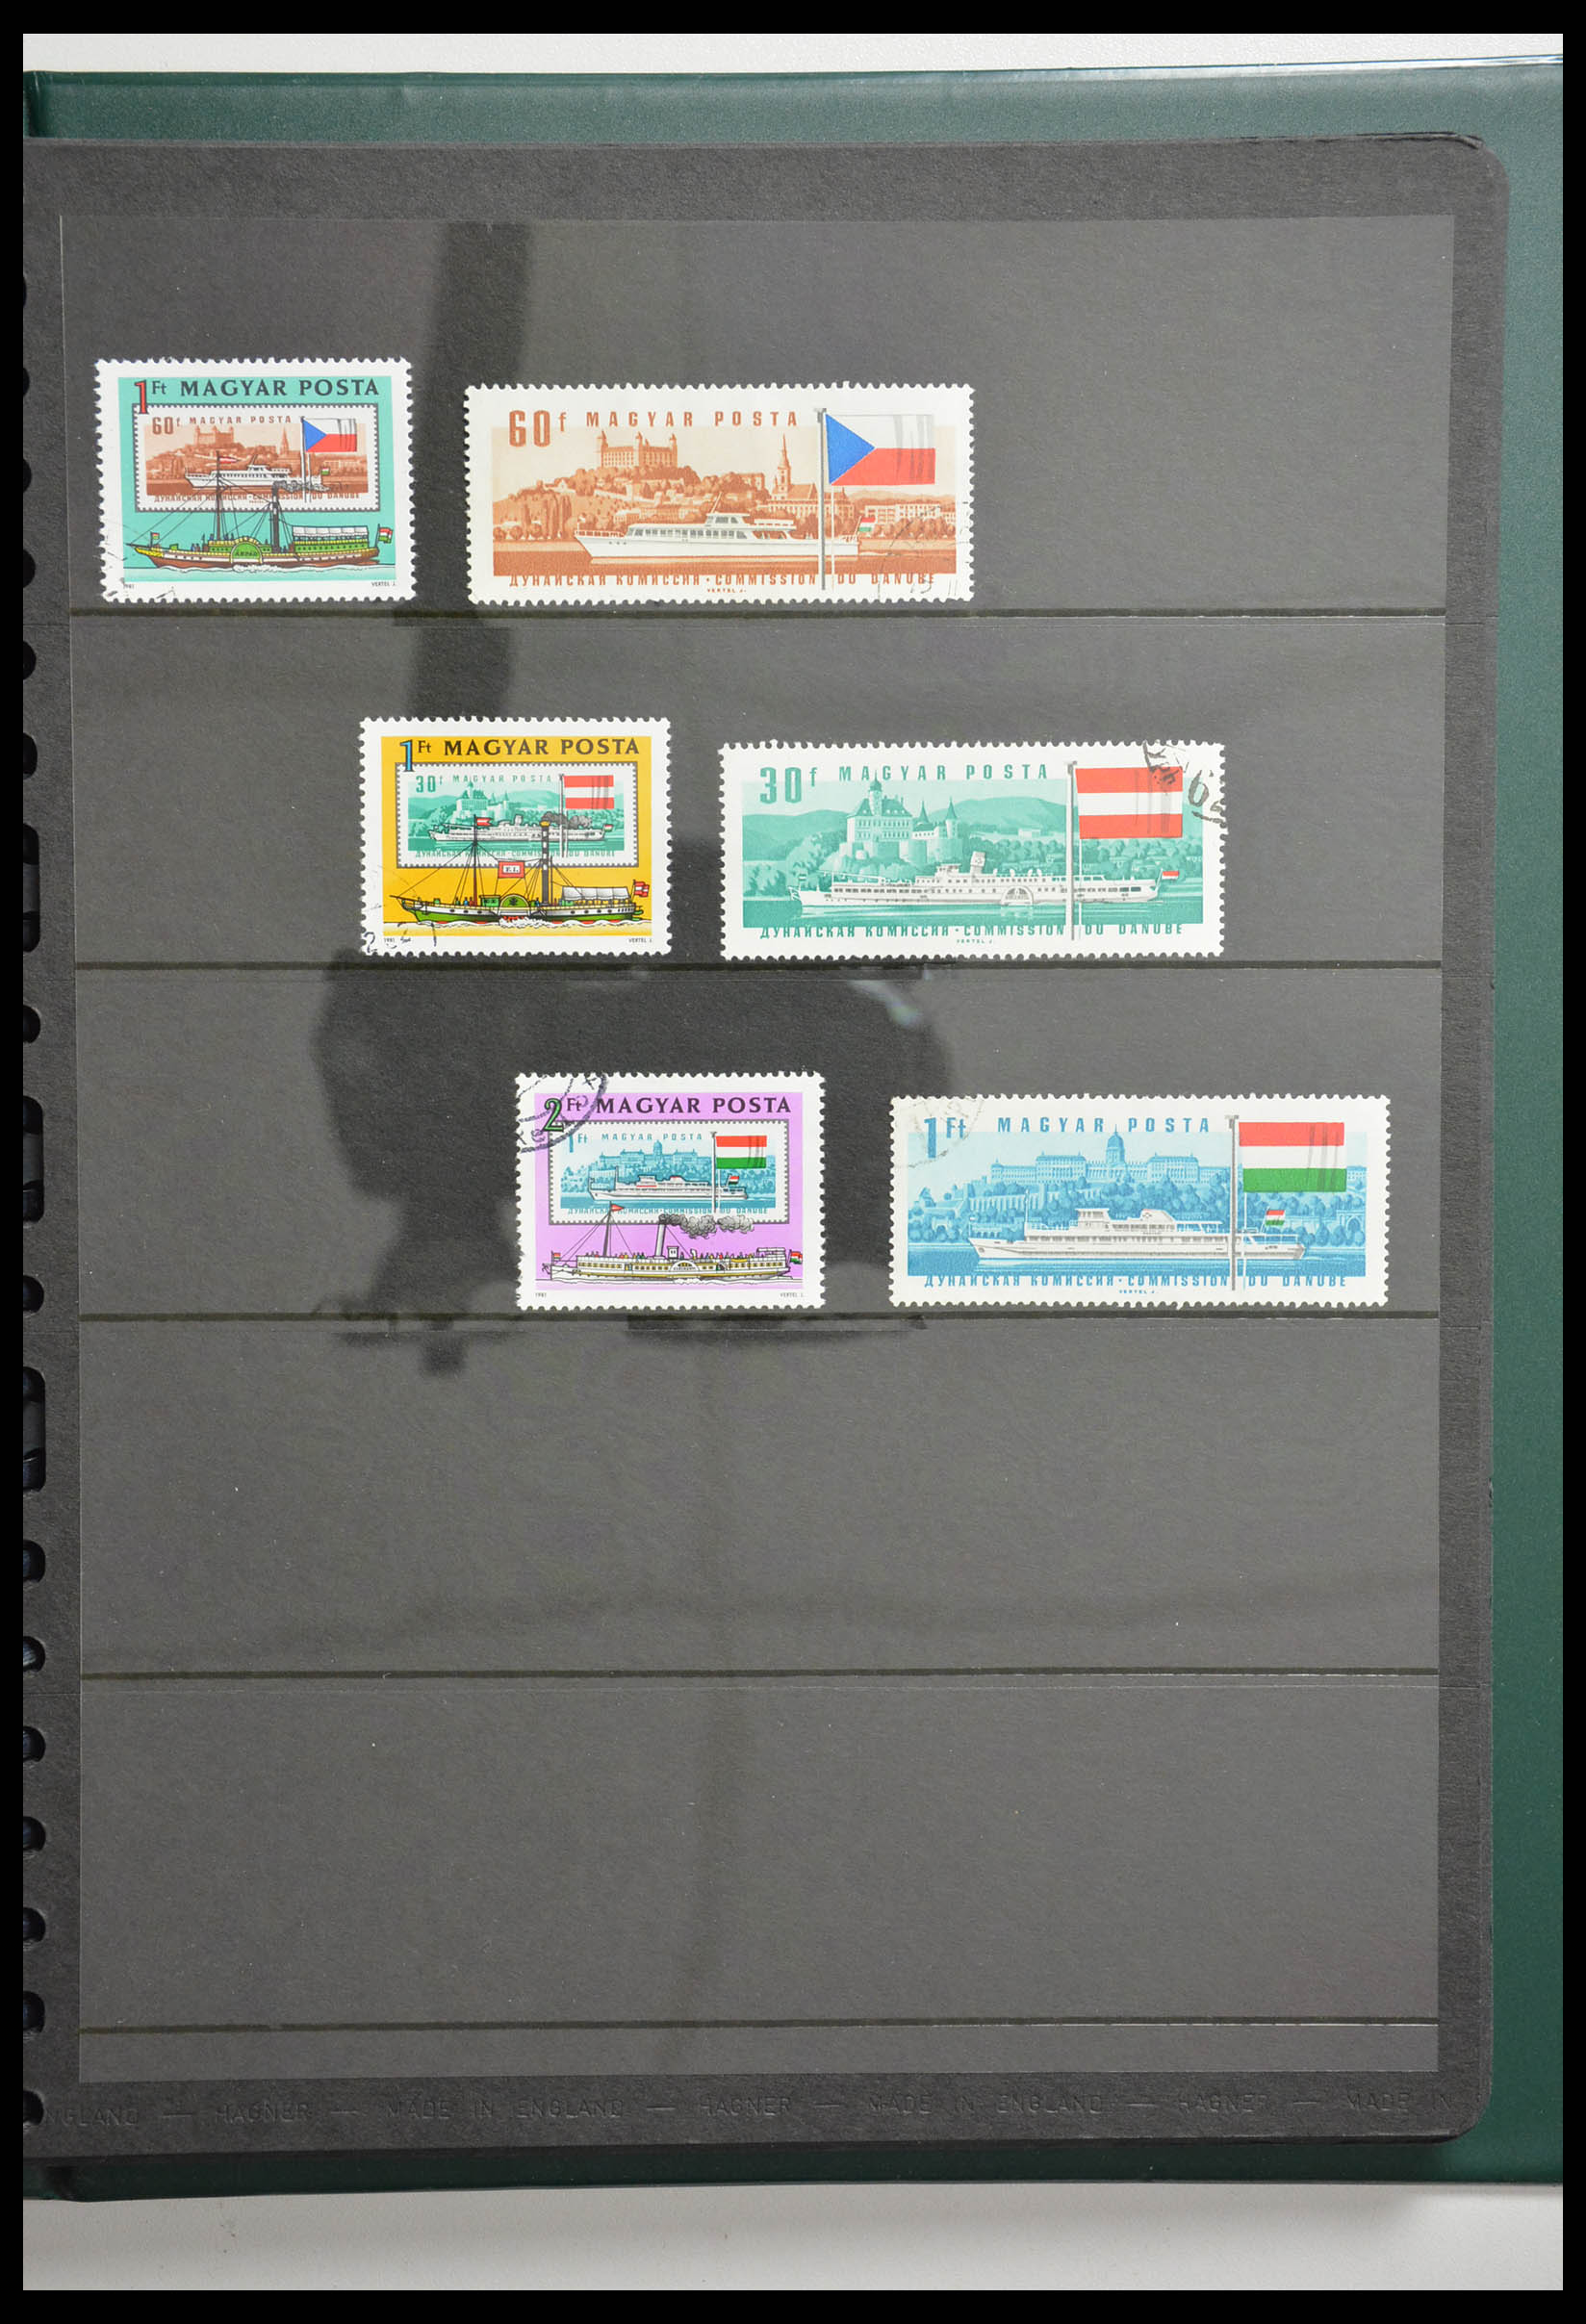 28337 063 - 28337 Postzegel op postzegel 1840-2001.